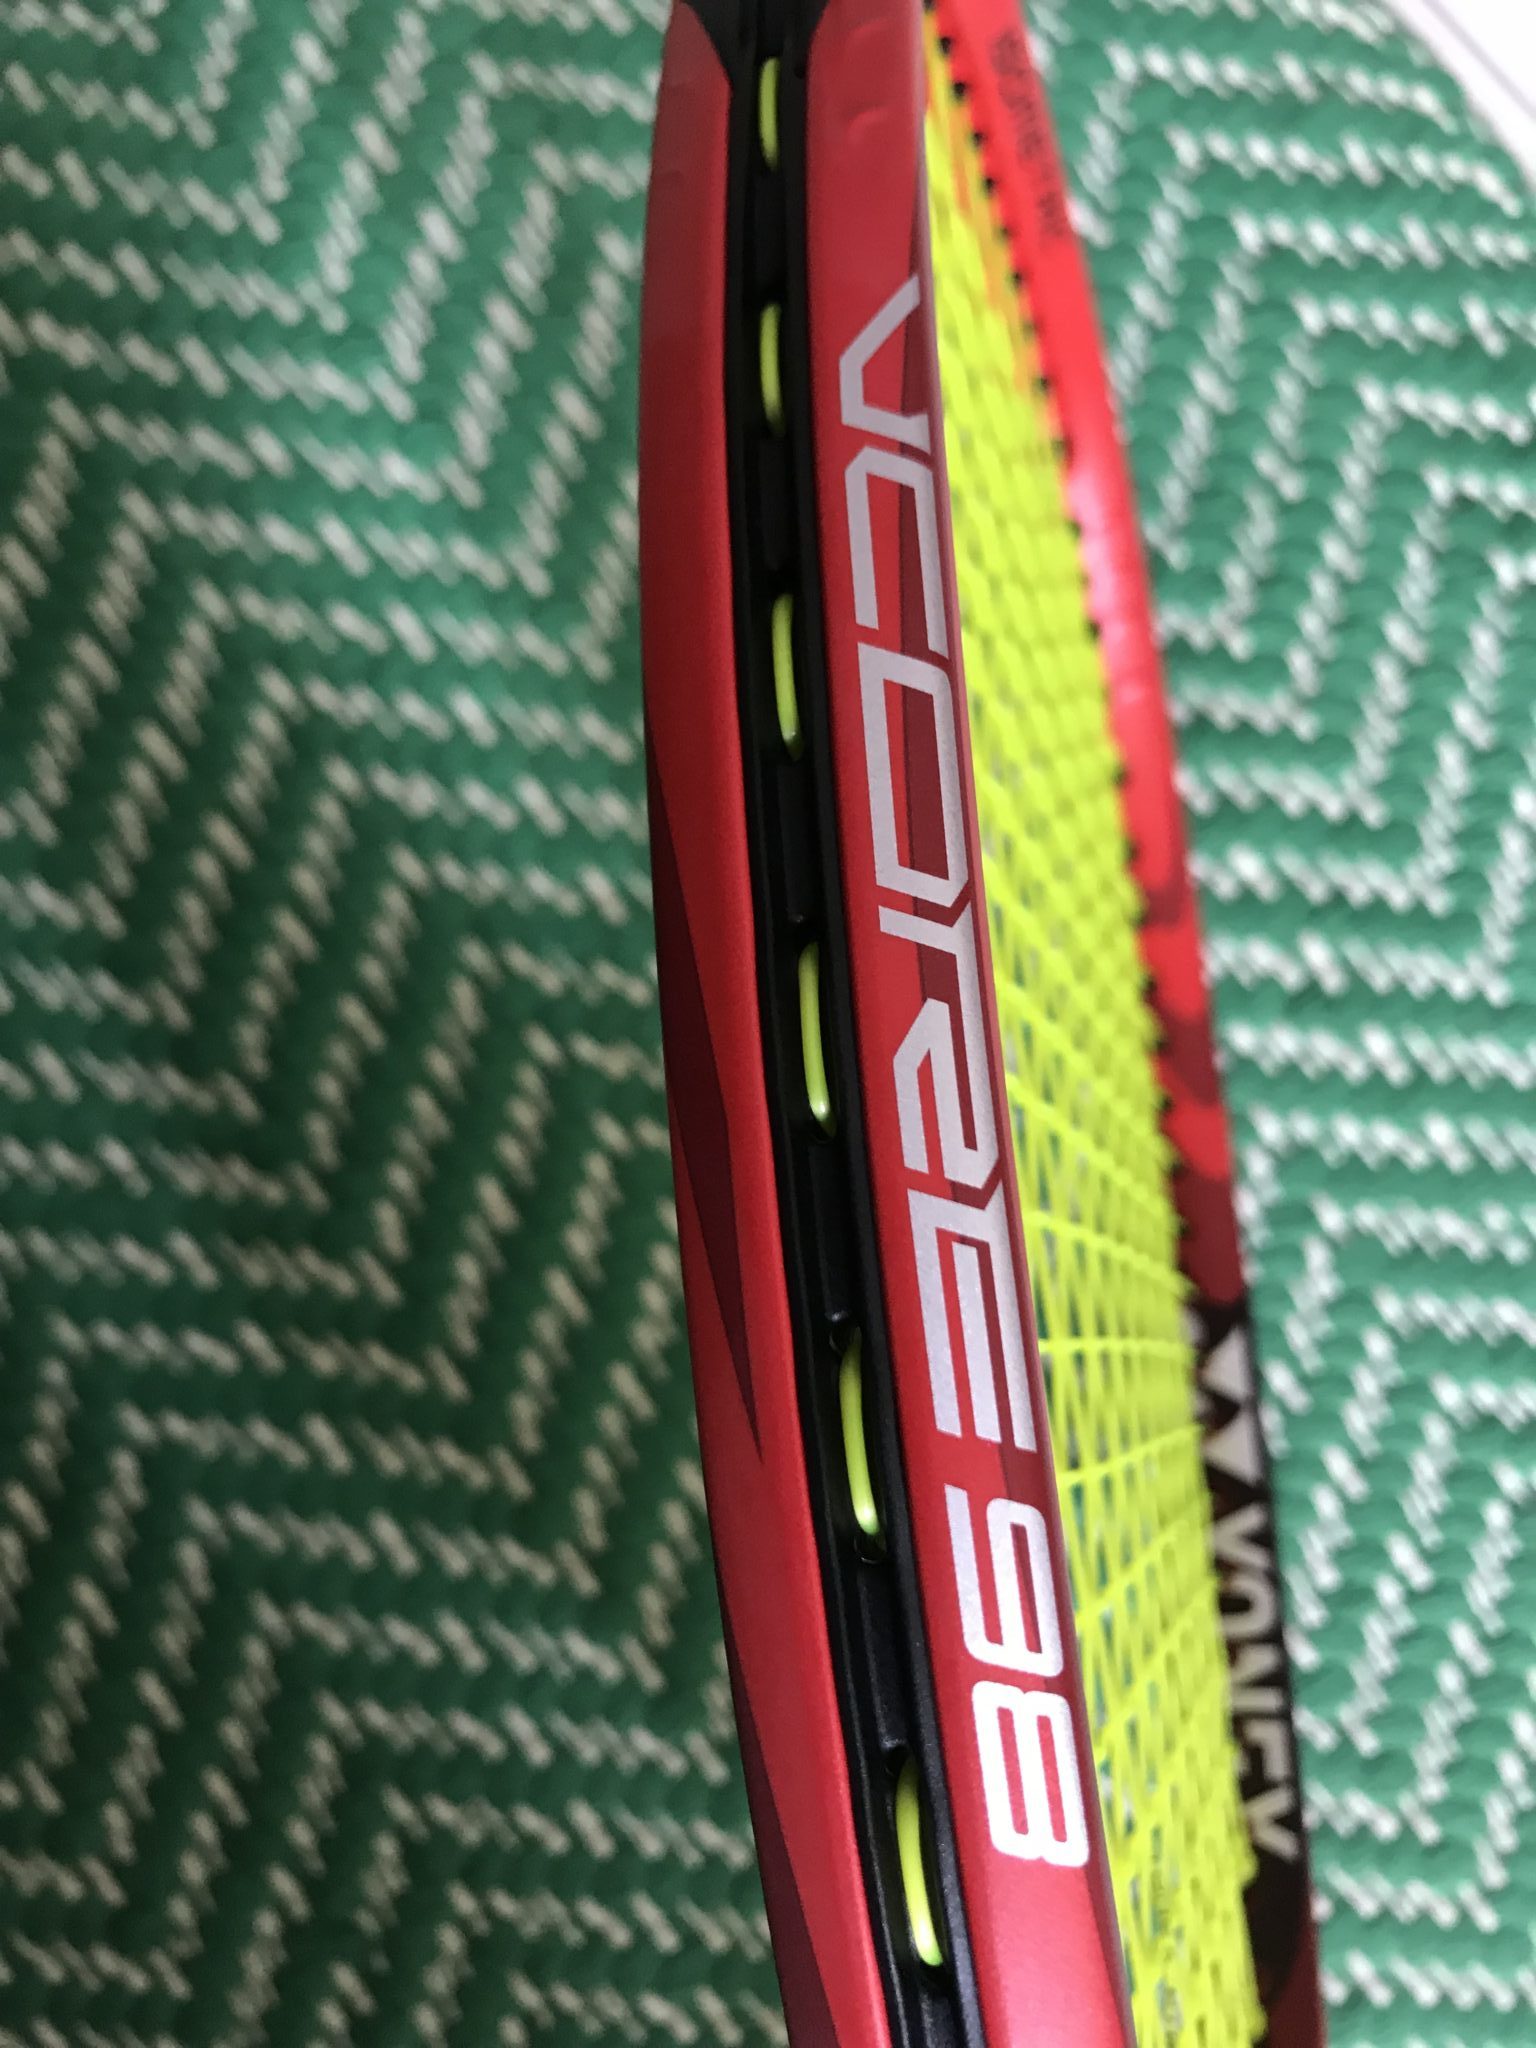 Yonex Graphite Vcore 98 G4 Tennis Racquet In Red Not Strung 